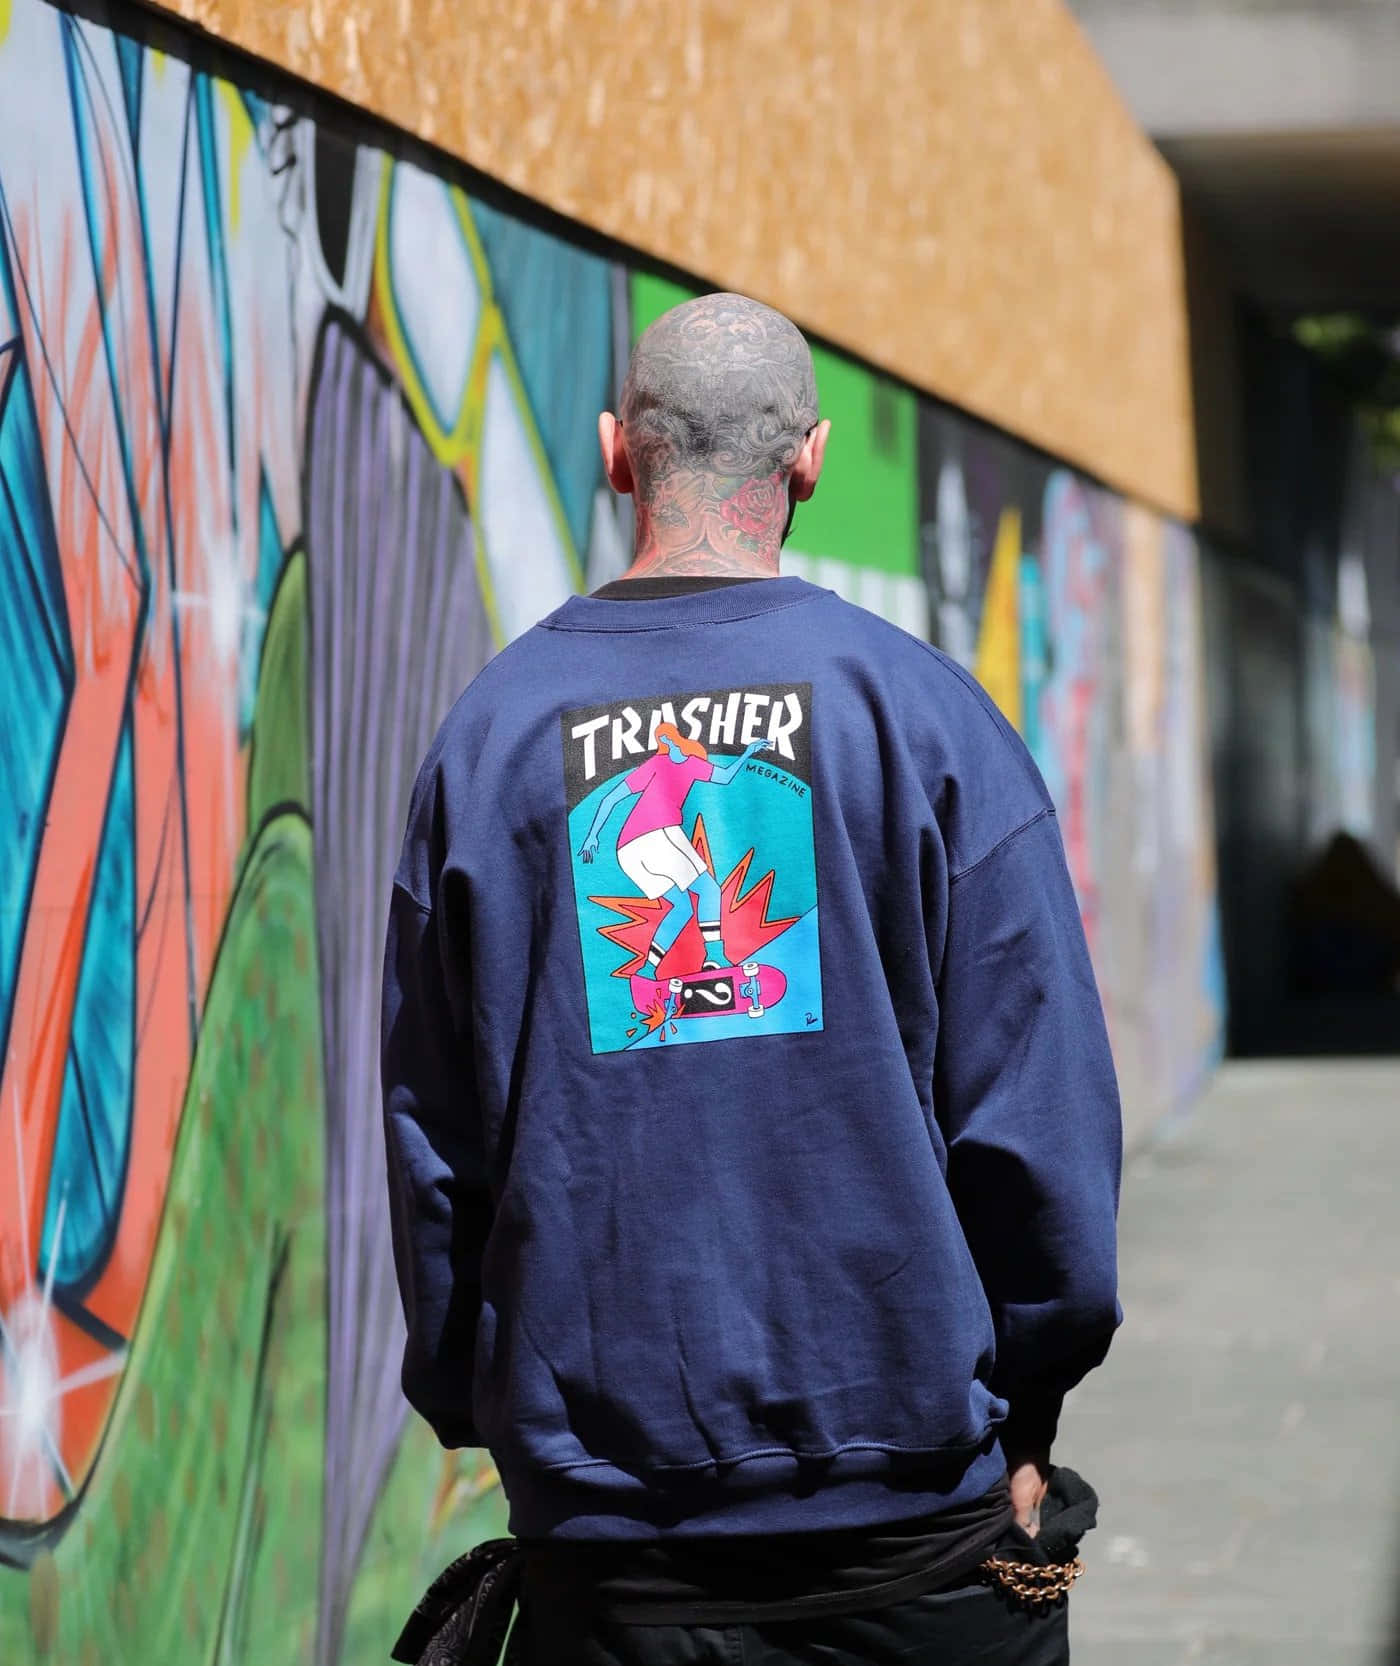 A Man Walking Down A Street With Graffiti On His Sweatshirt